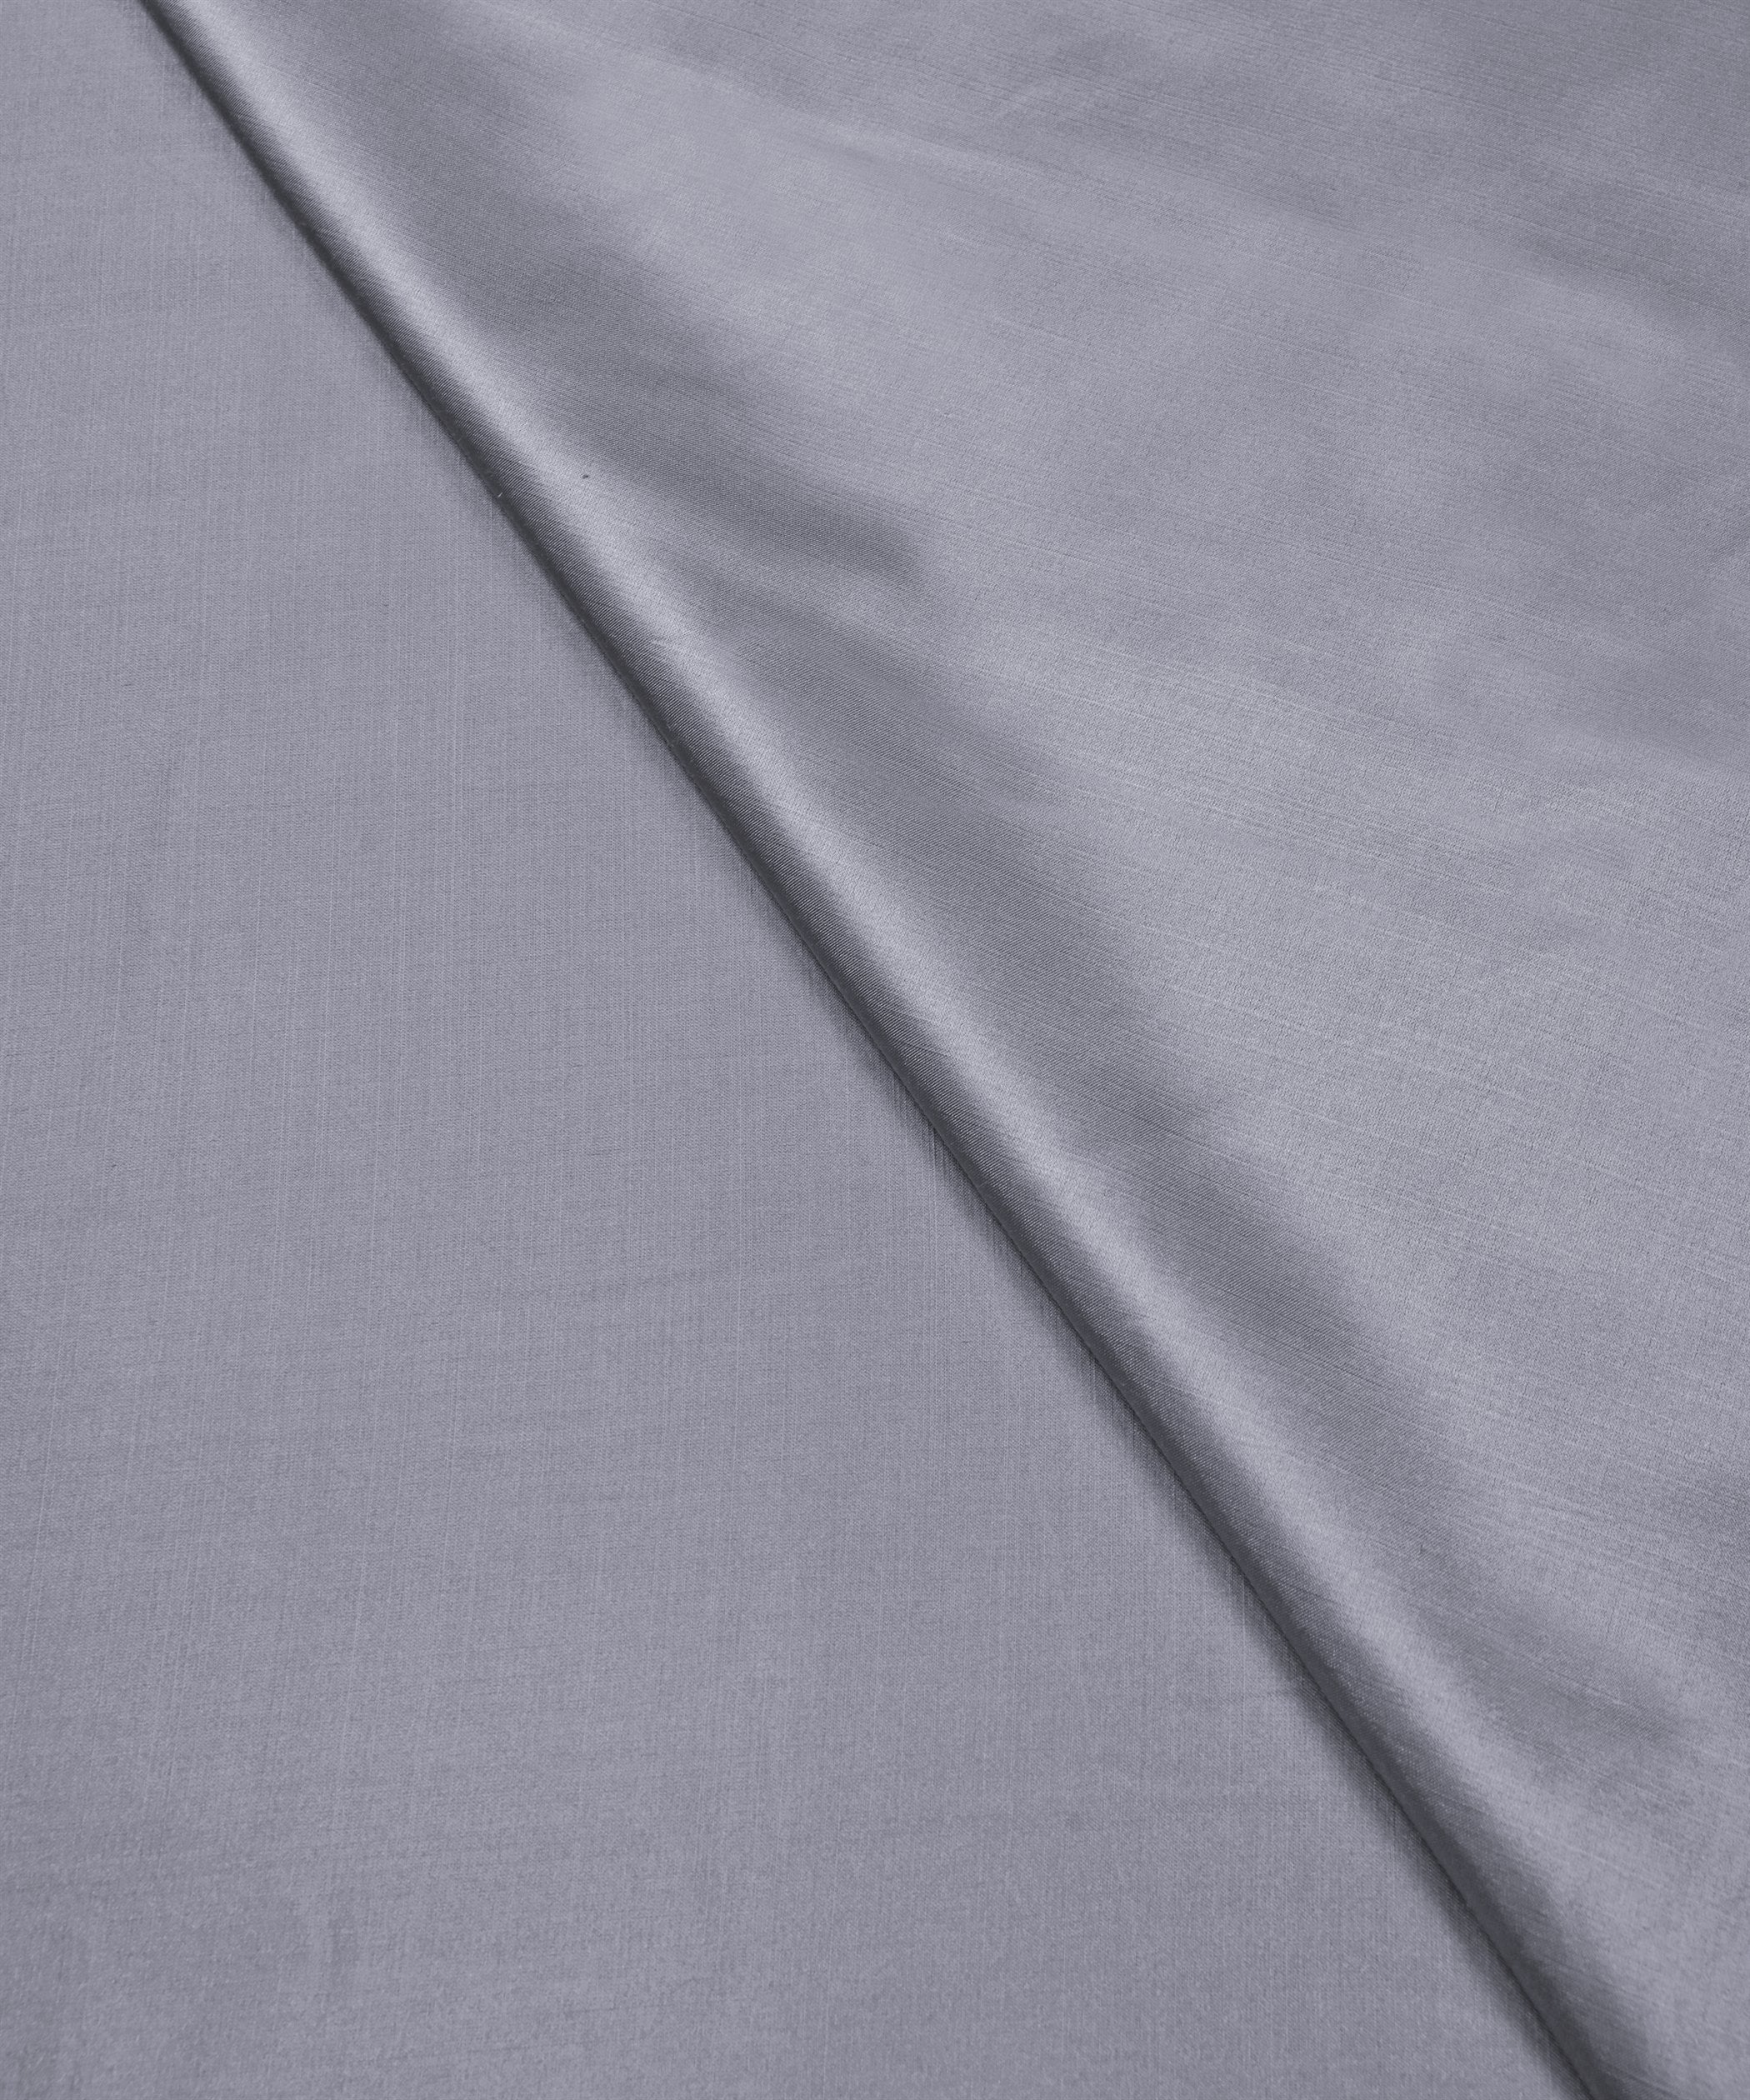 Anchor Grey Plain Dyed Modal Satin Fabric